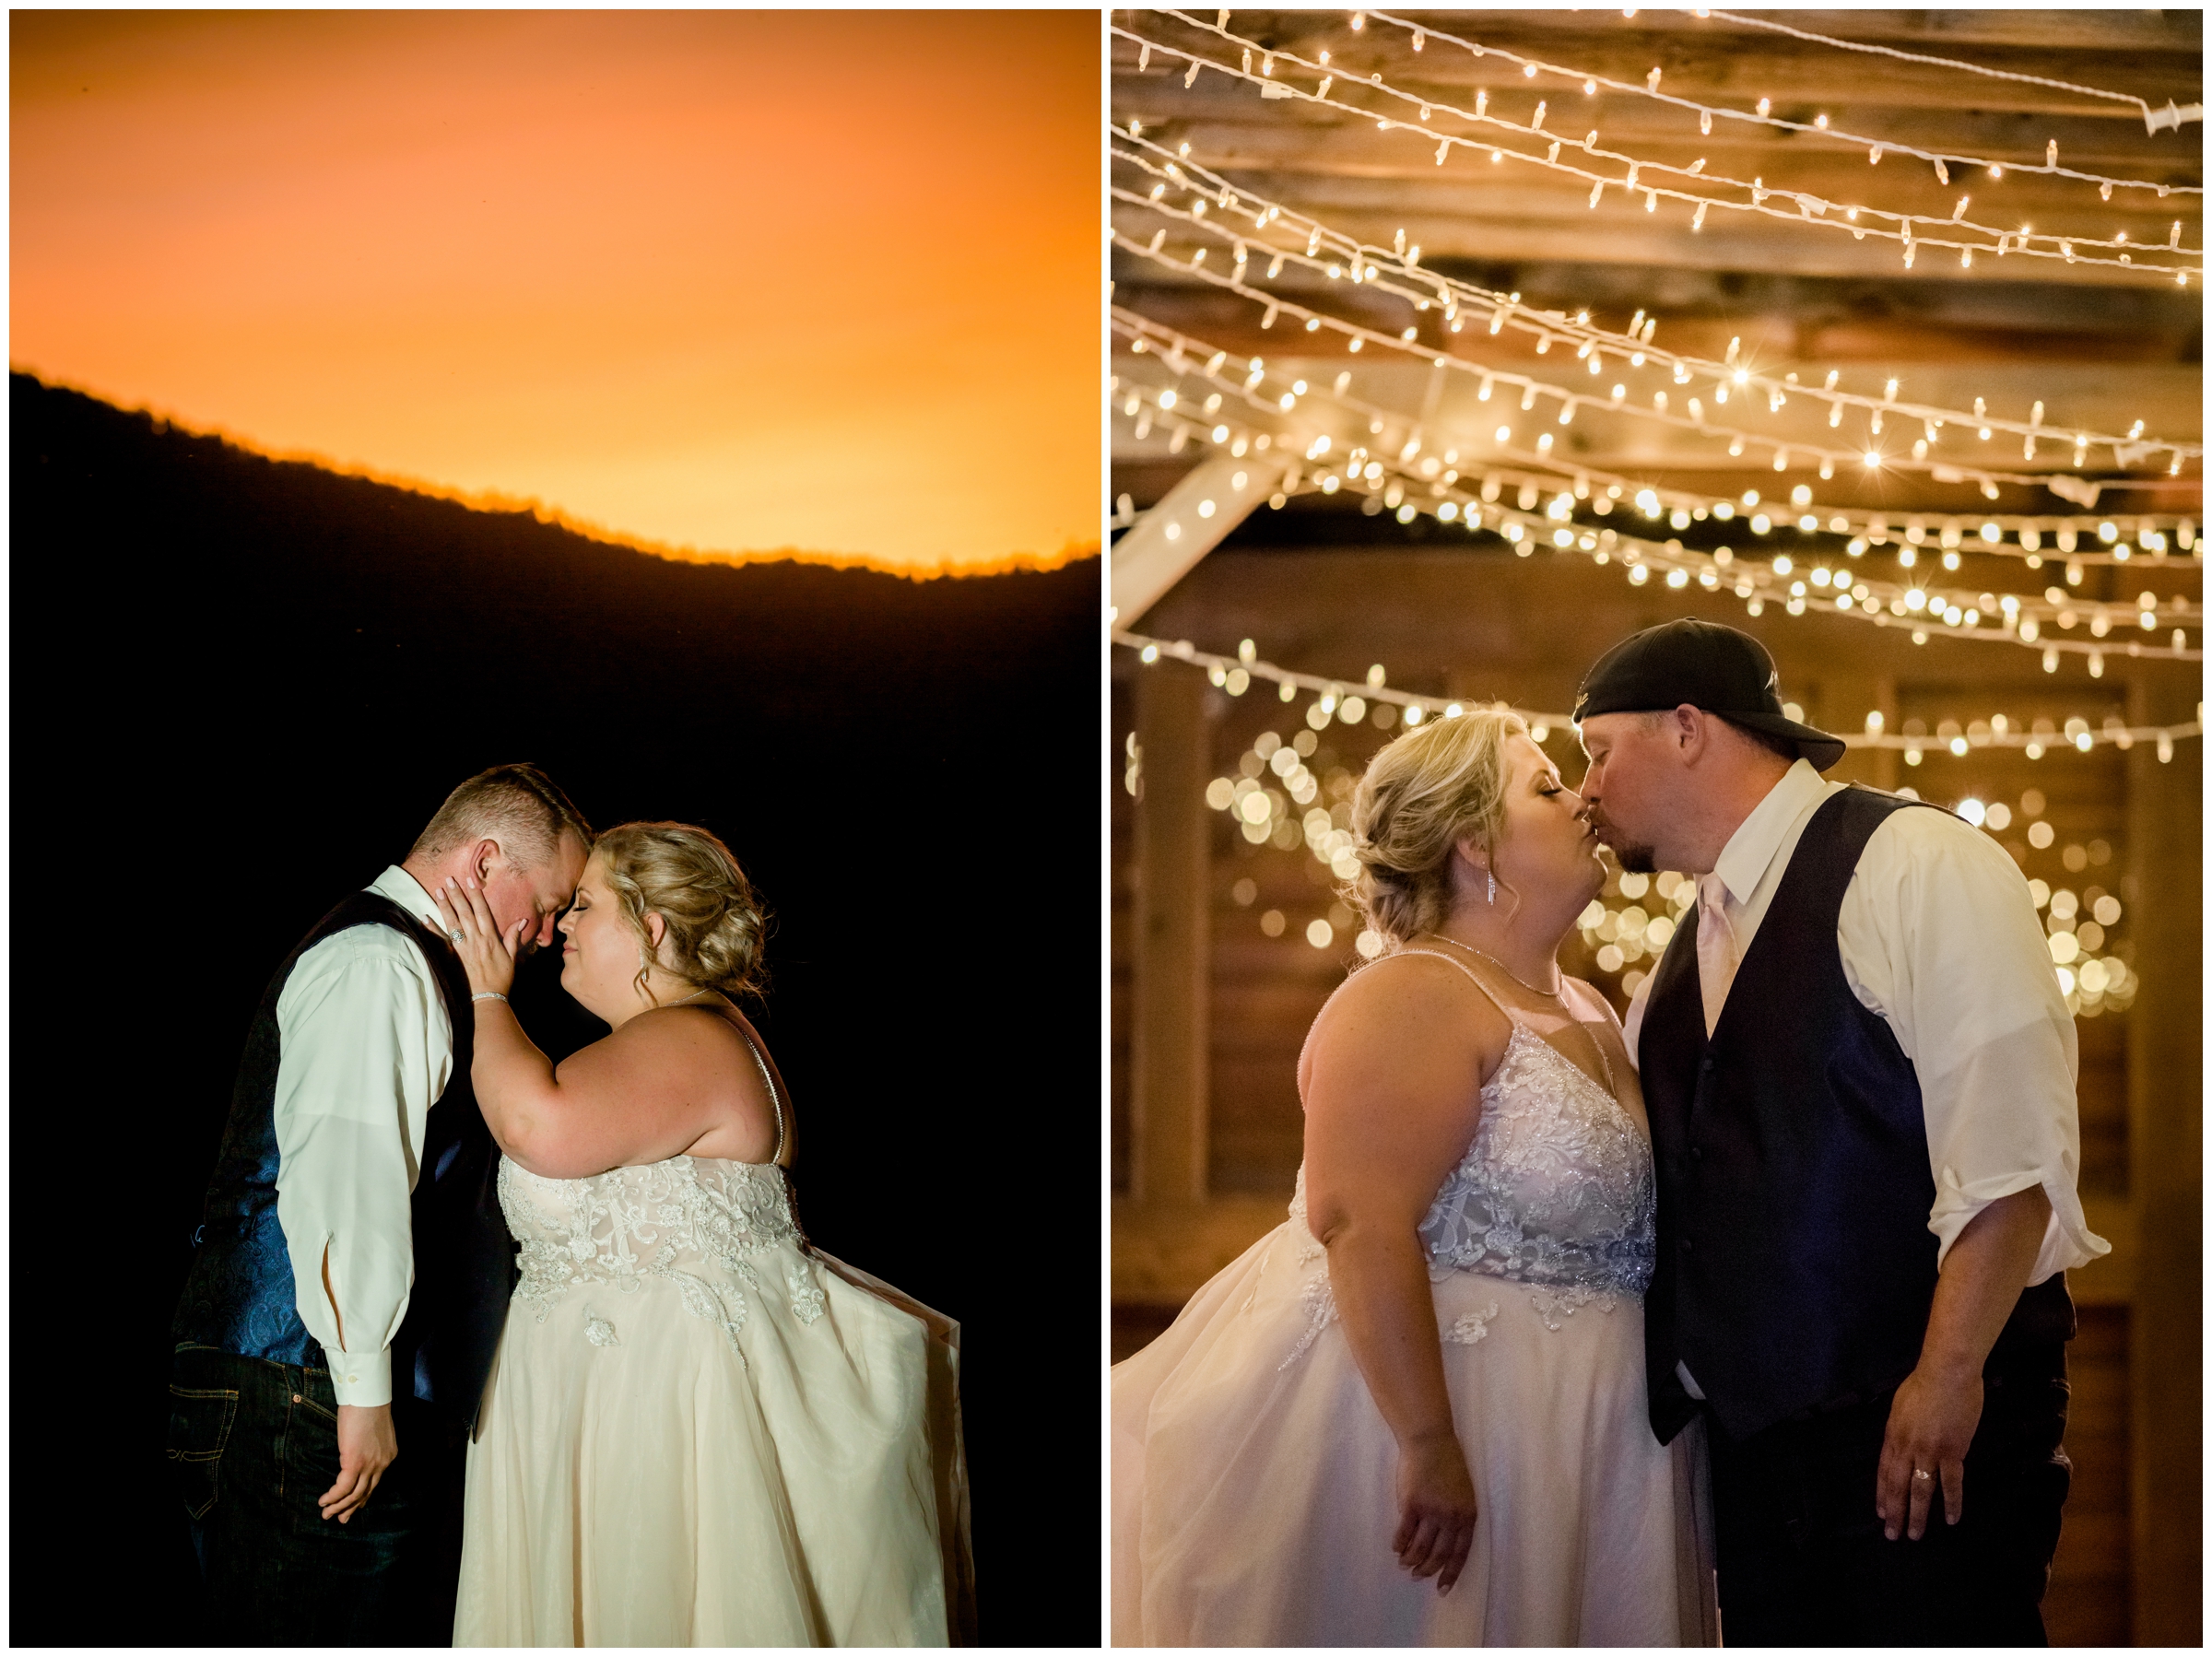 colorful Colorado sunset wedding portraits at Wedgewood Weddings